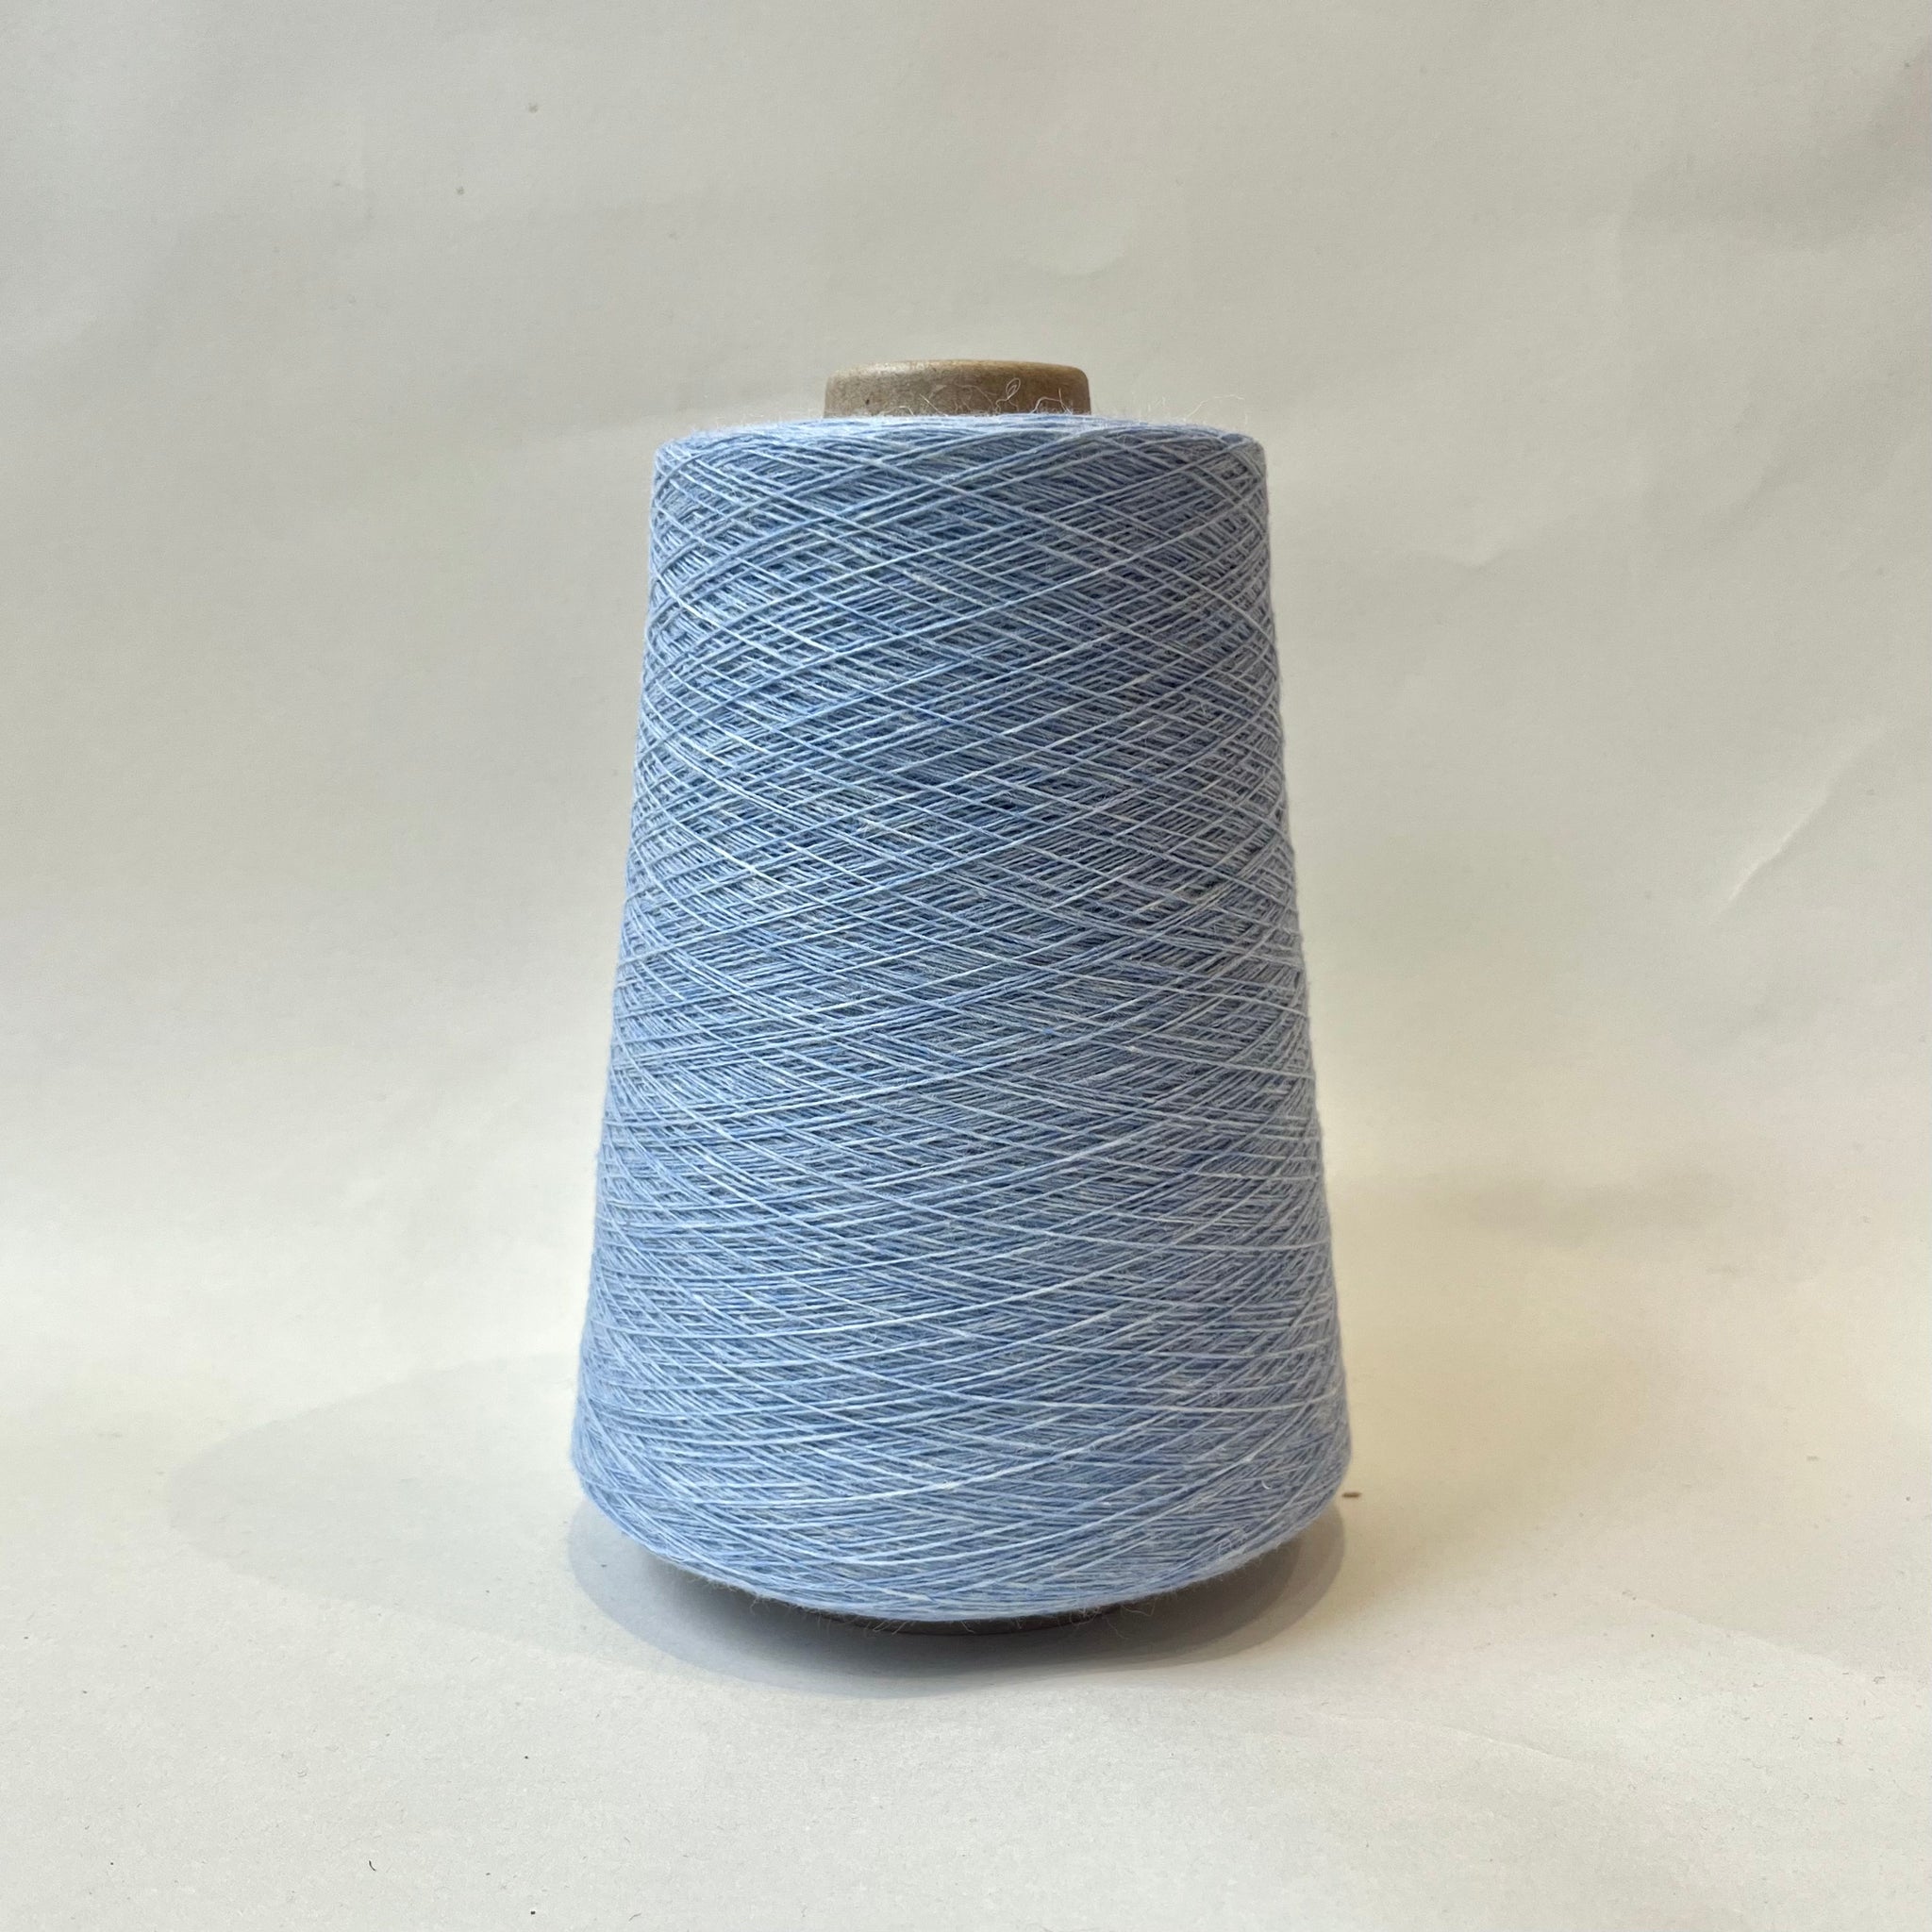 Single Ply Wool Blend - Periwinkle